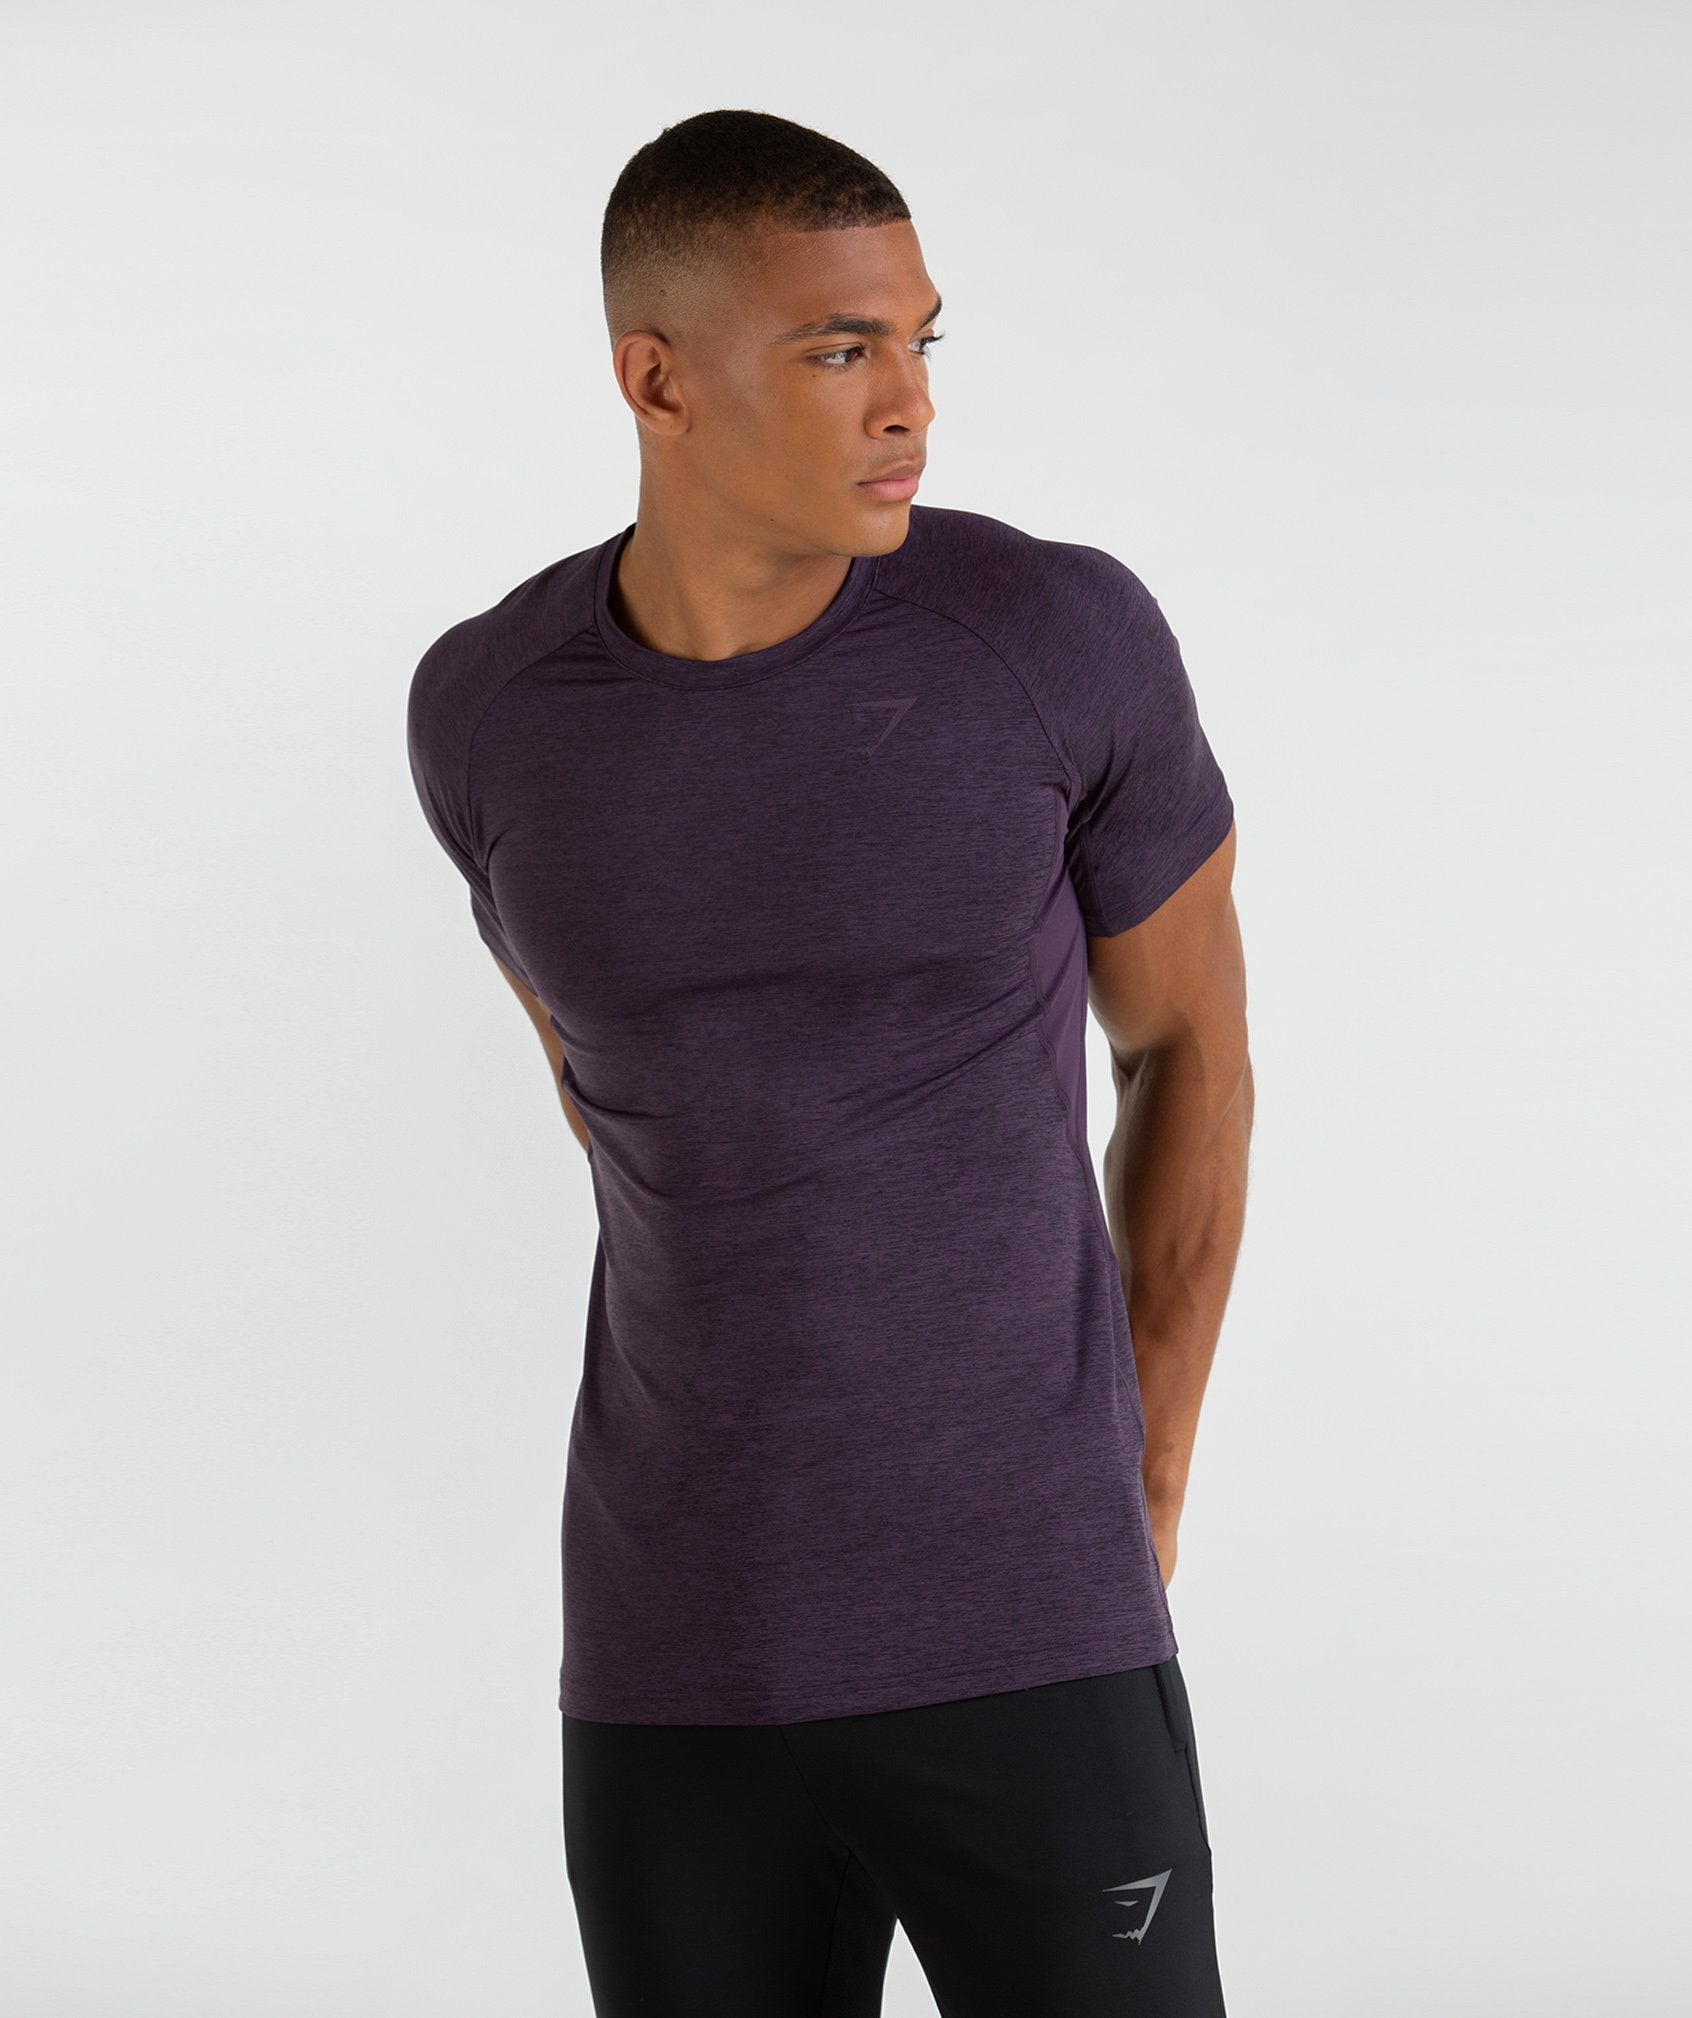 Vertex T-Shirt in Nightshade Purple Marl - view 1